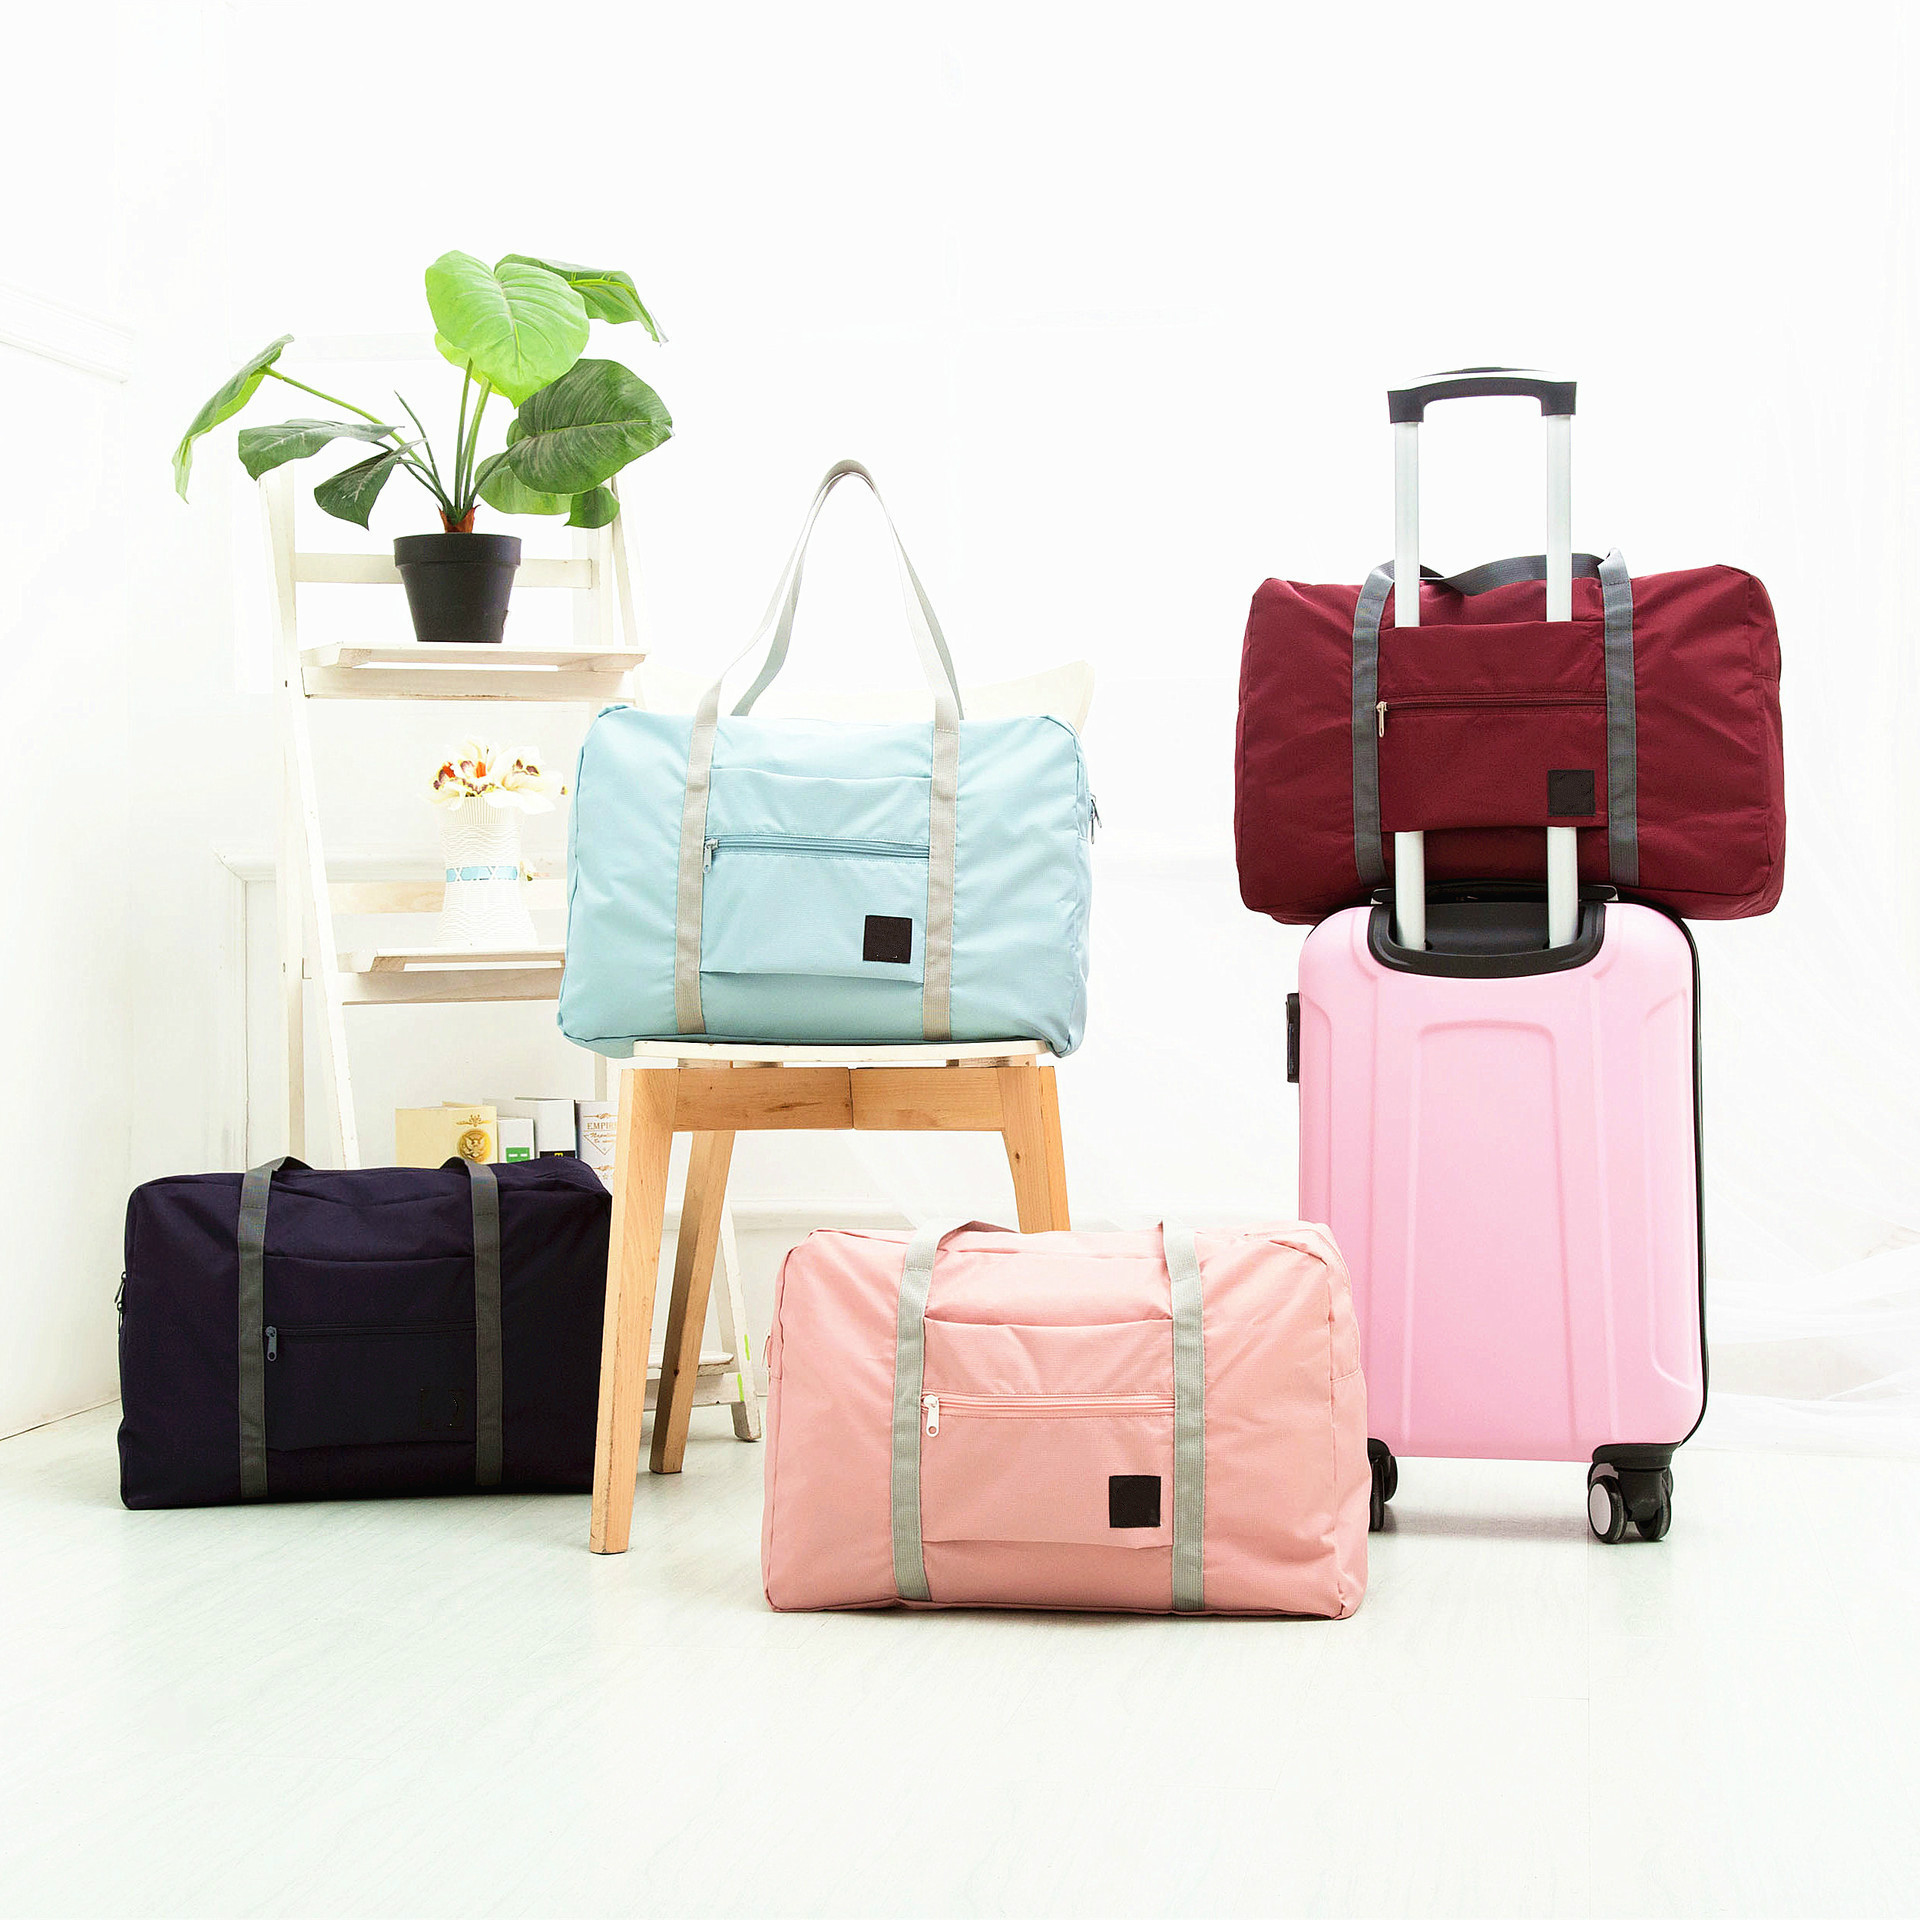 Folding Travel Bag Nylon Travel Bags Hand Luggage for Men & Women Fashion Travel Duffle Bags Tote Large Handbags Duffel